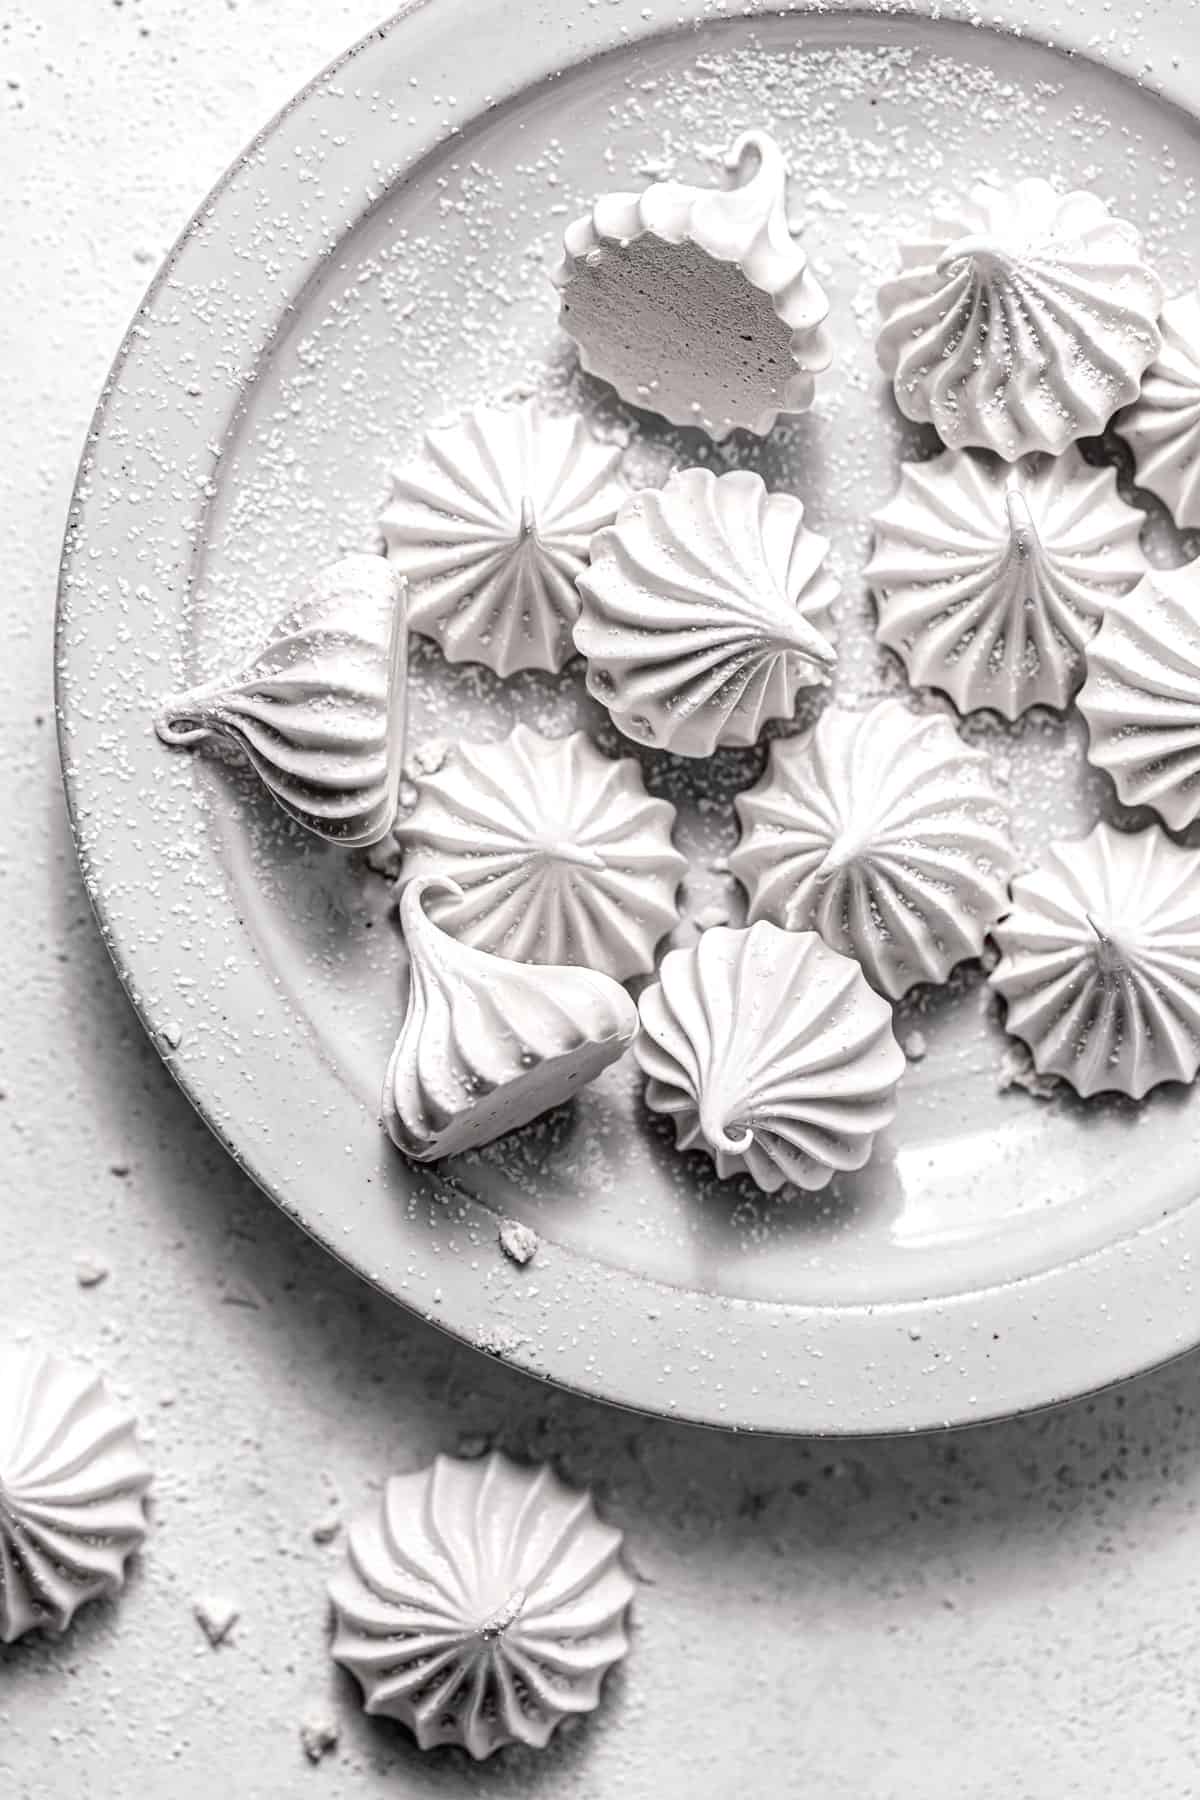 meringue cookies sprinkled with powdered sugar on white plate.